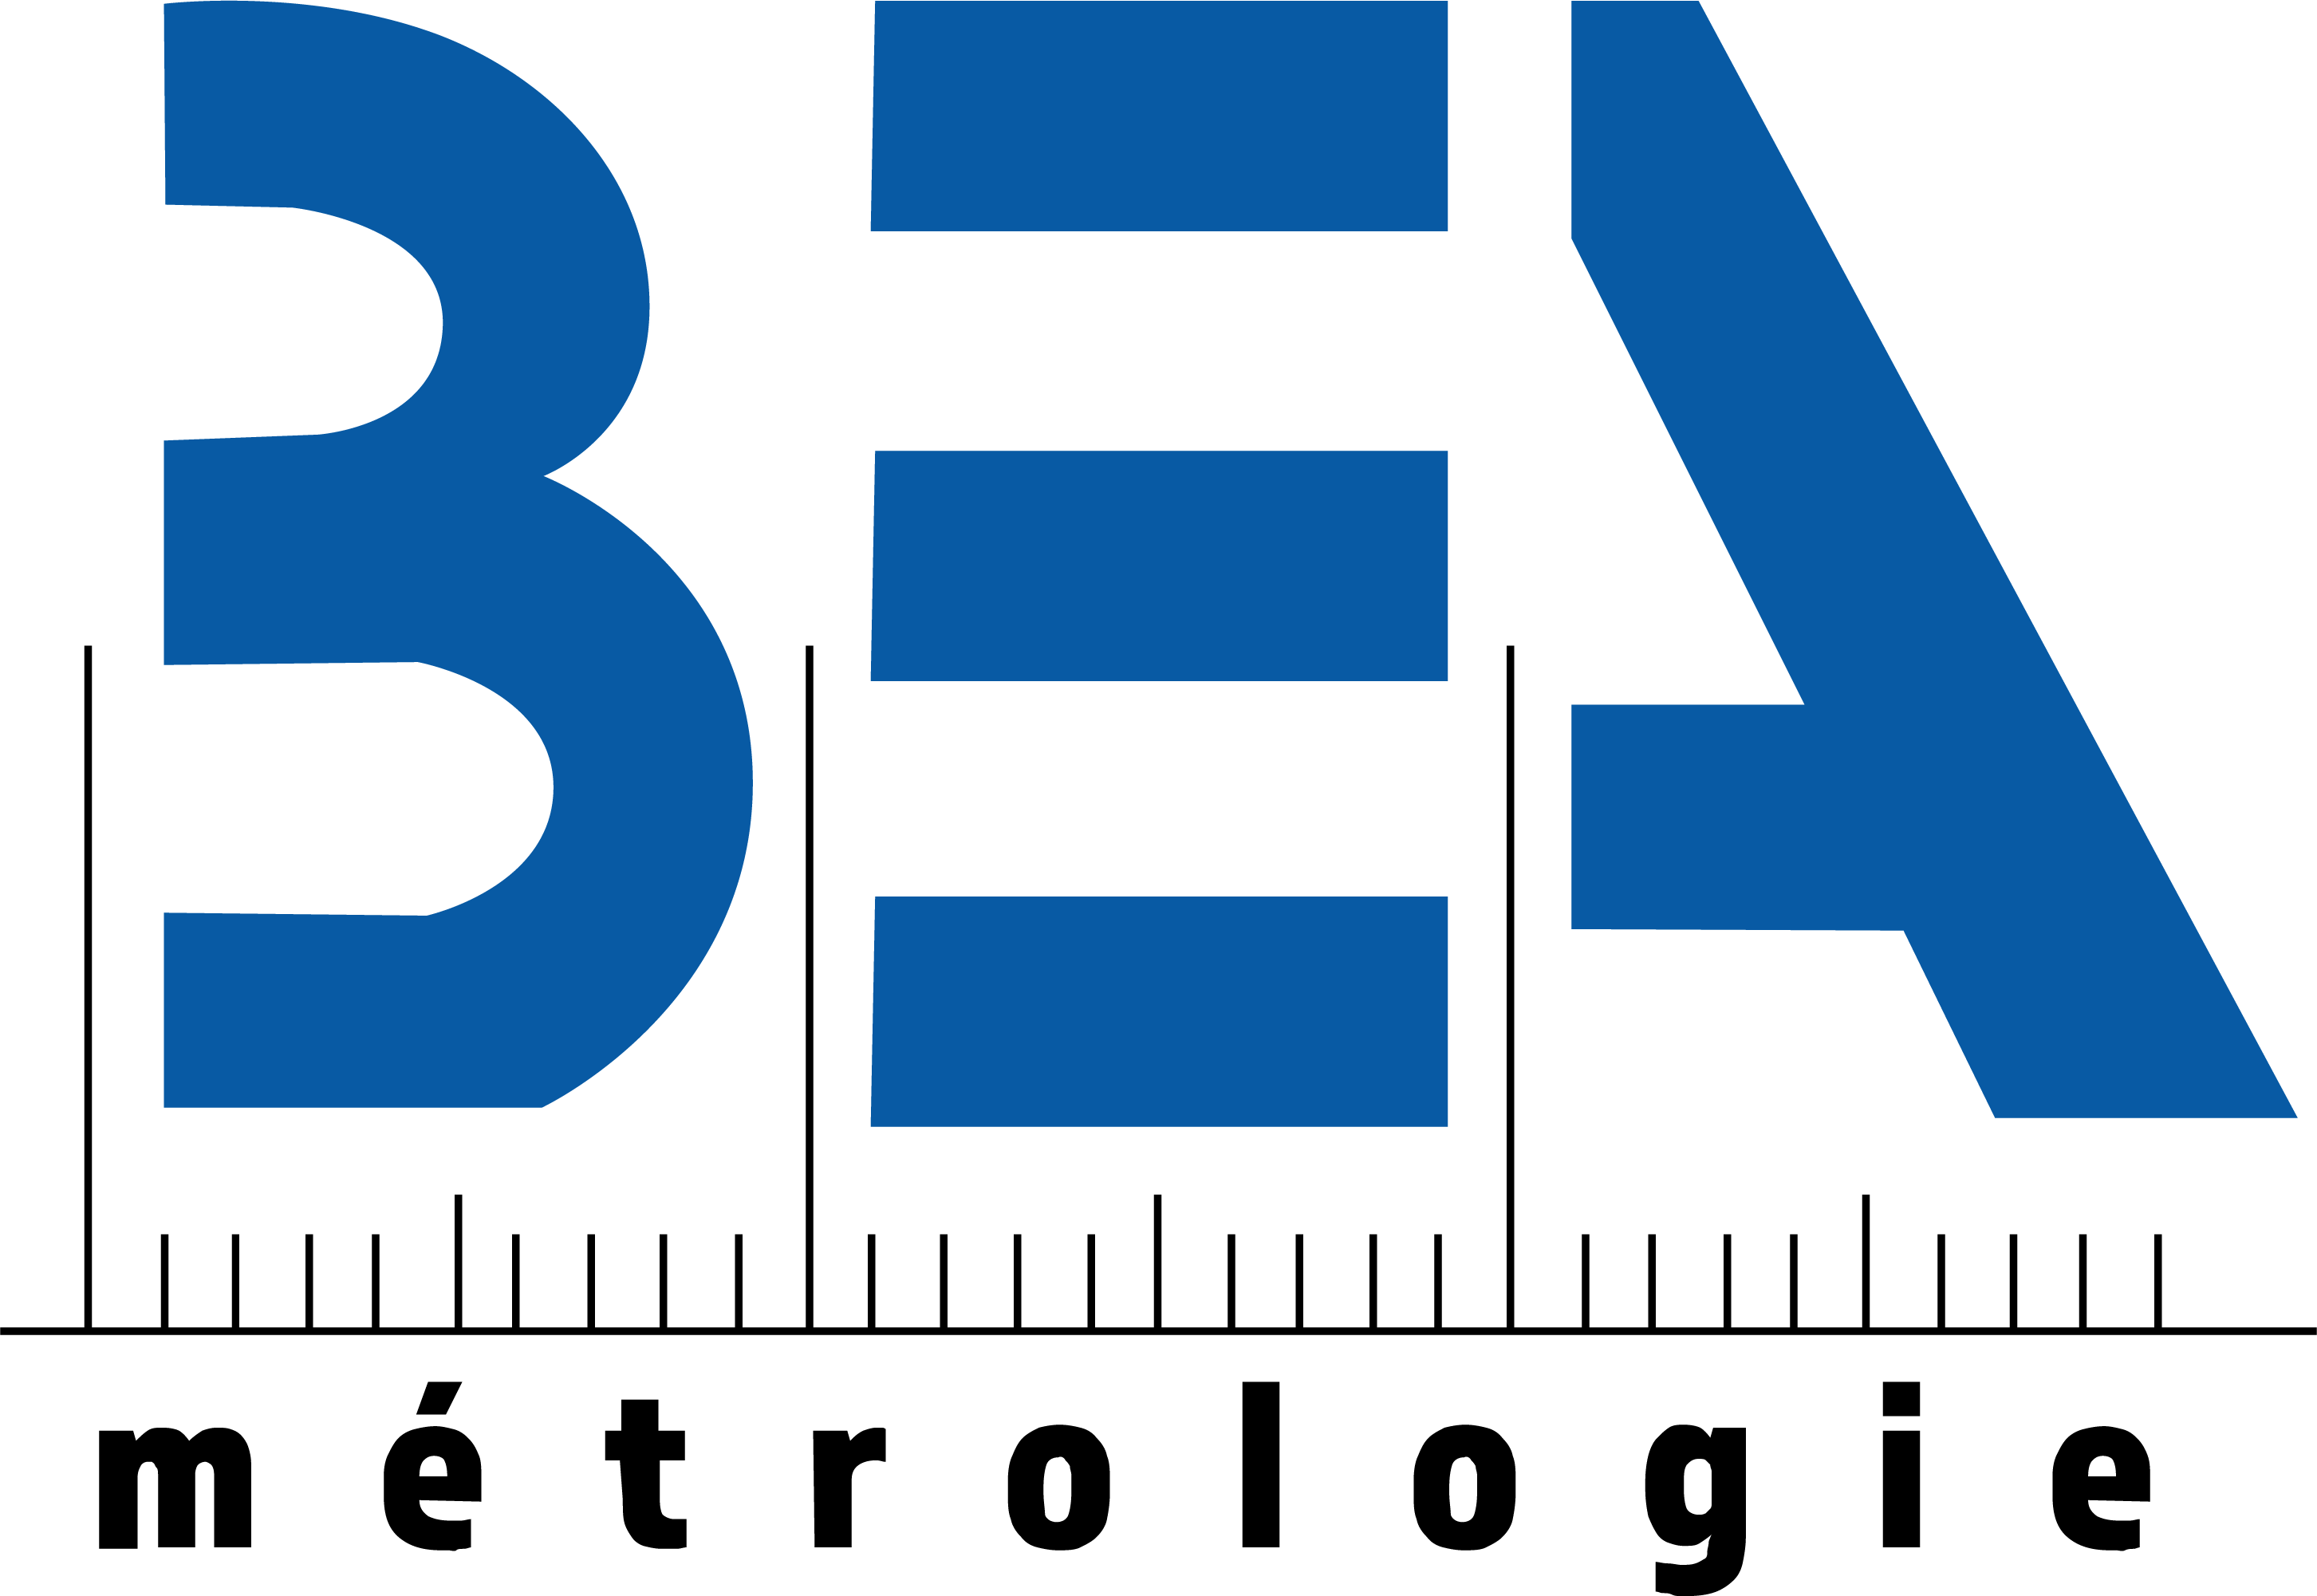 bea metrologie logo alternance